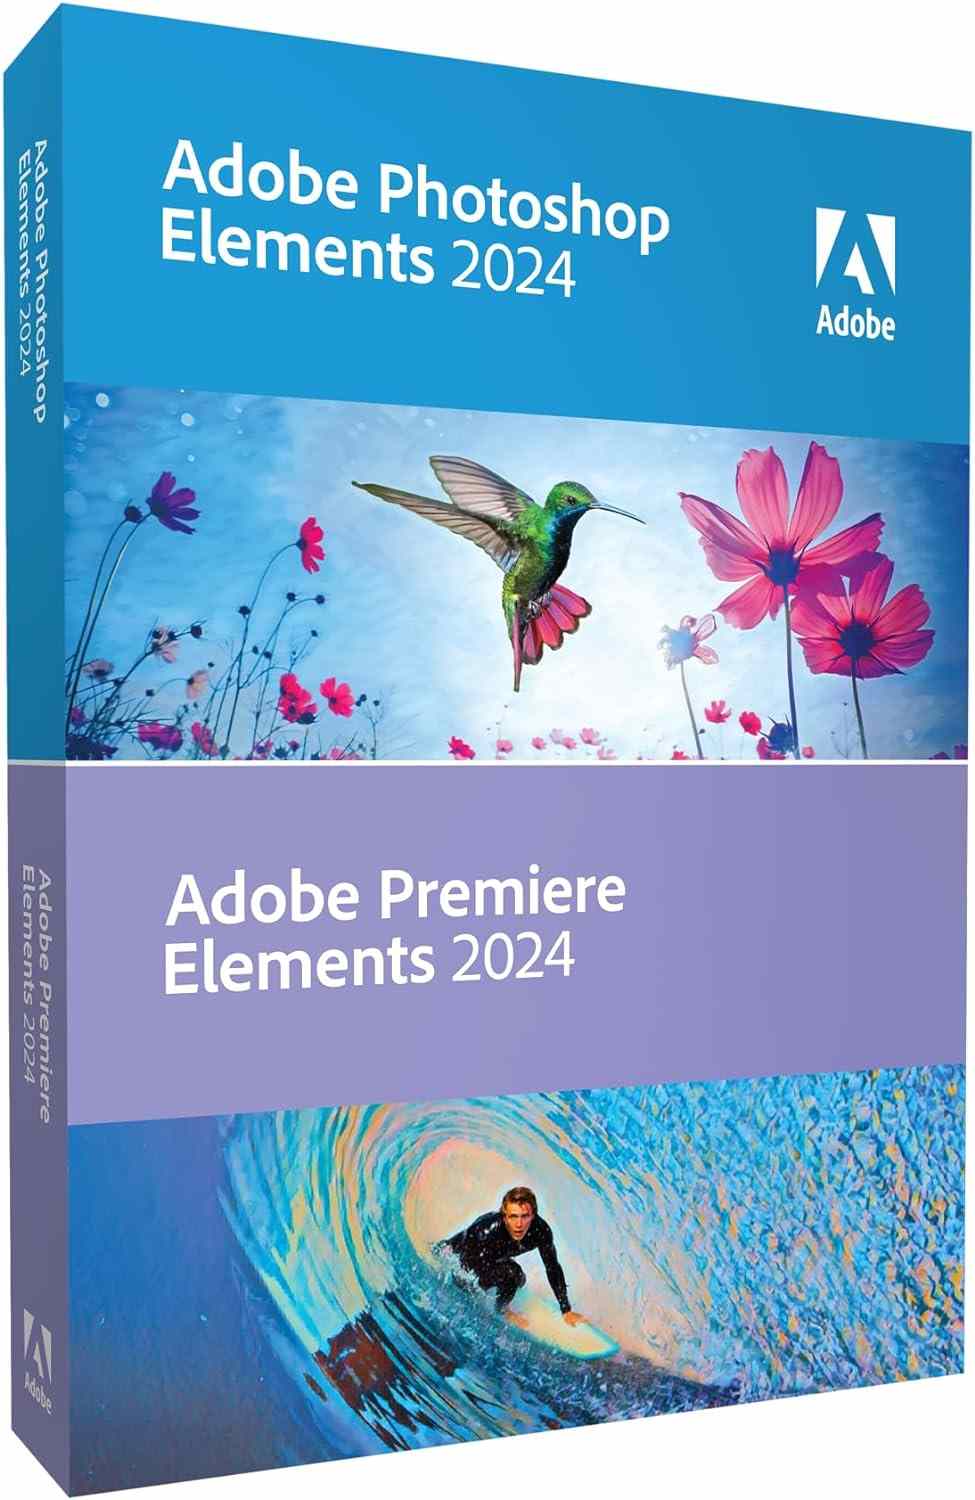 Adobe Photoshop & Adobe Premiere Elements 2024 MP ENG FULL BOX0 